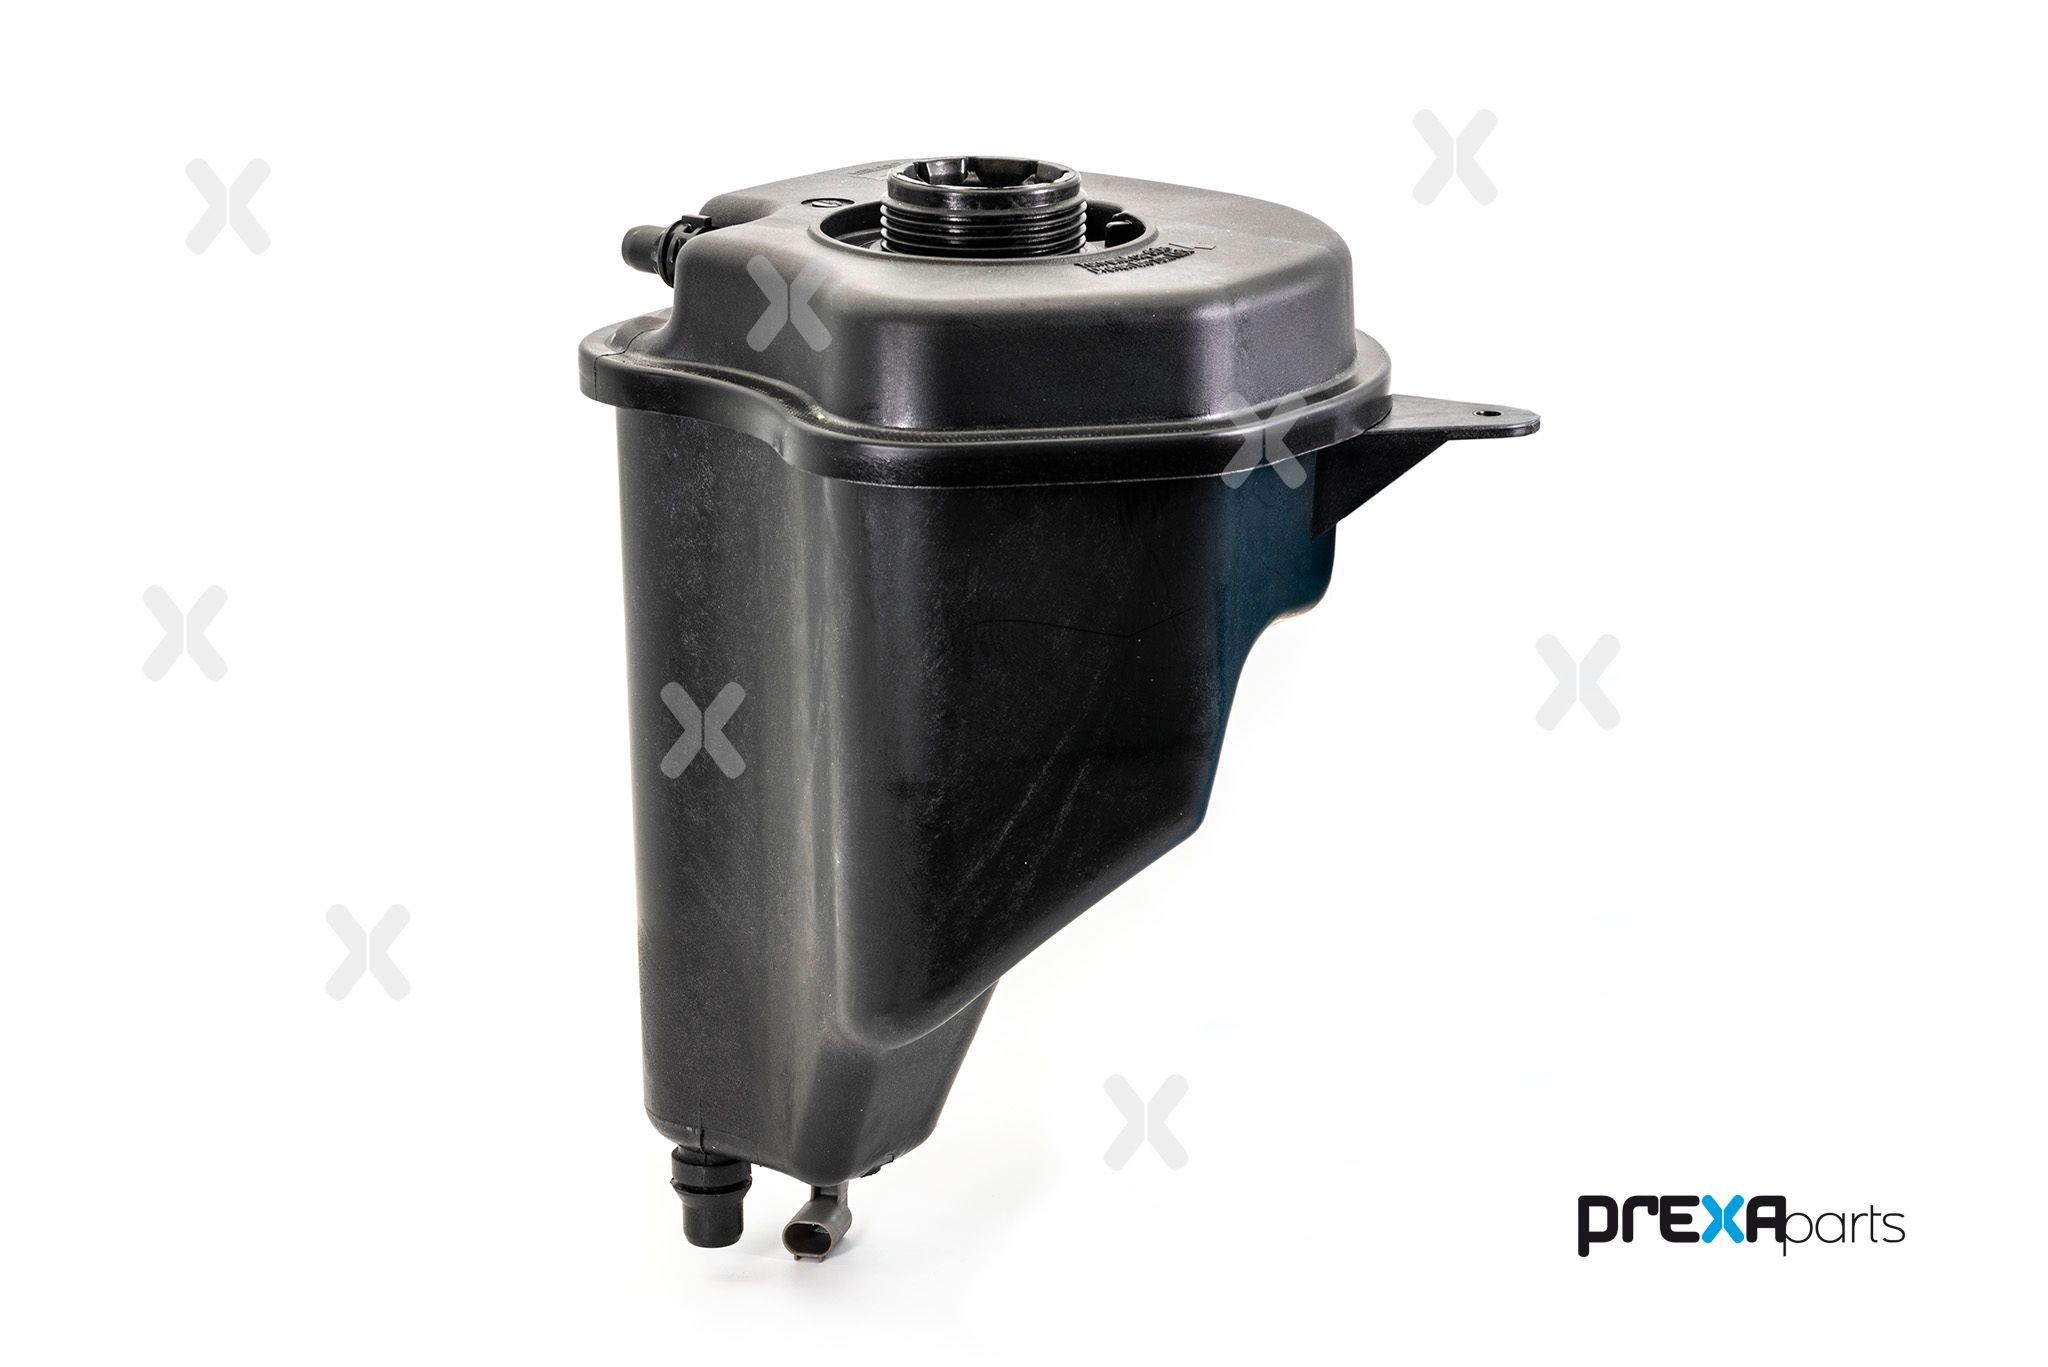 PREXAparts P227018 Coolant expansion tank 17138621092